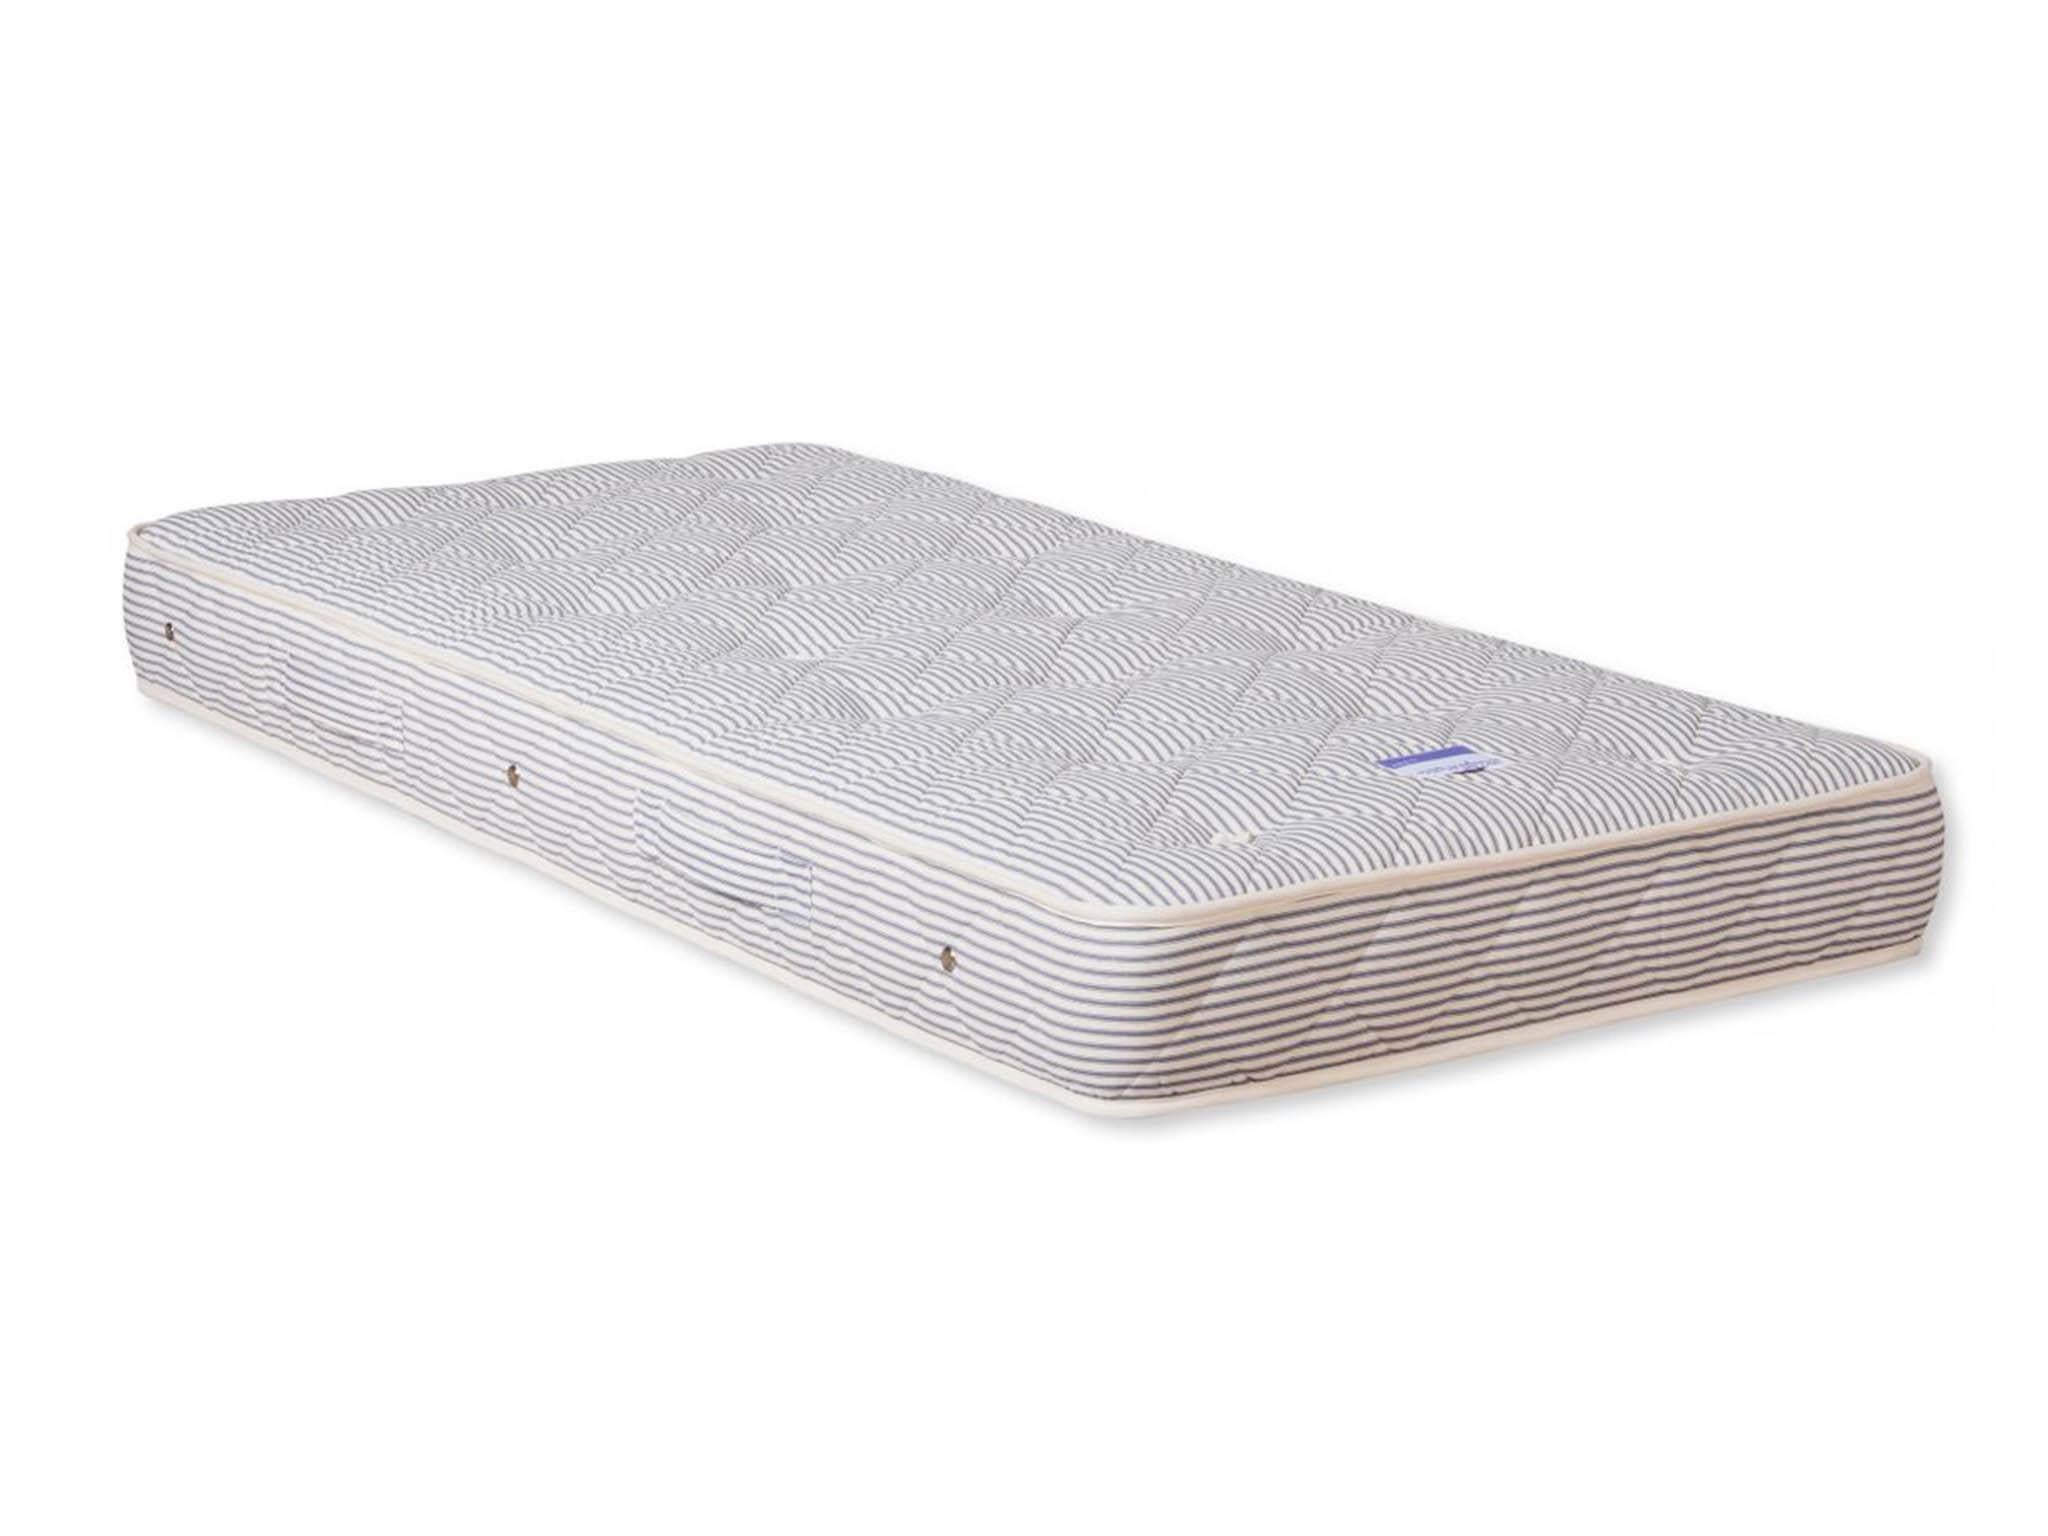 120cm by 60cm cot mattress